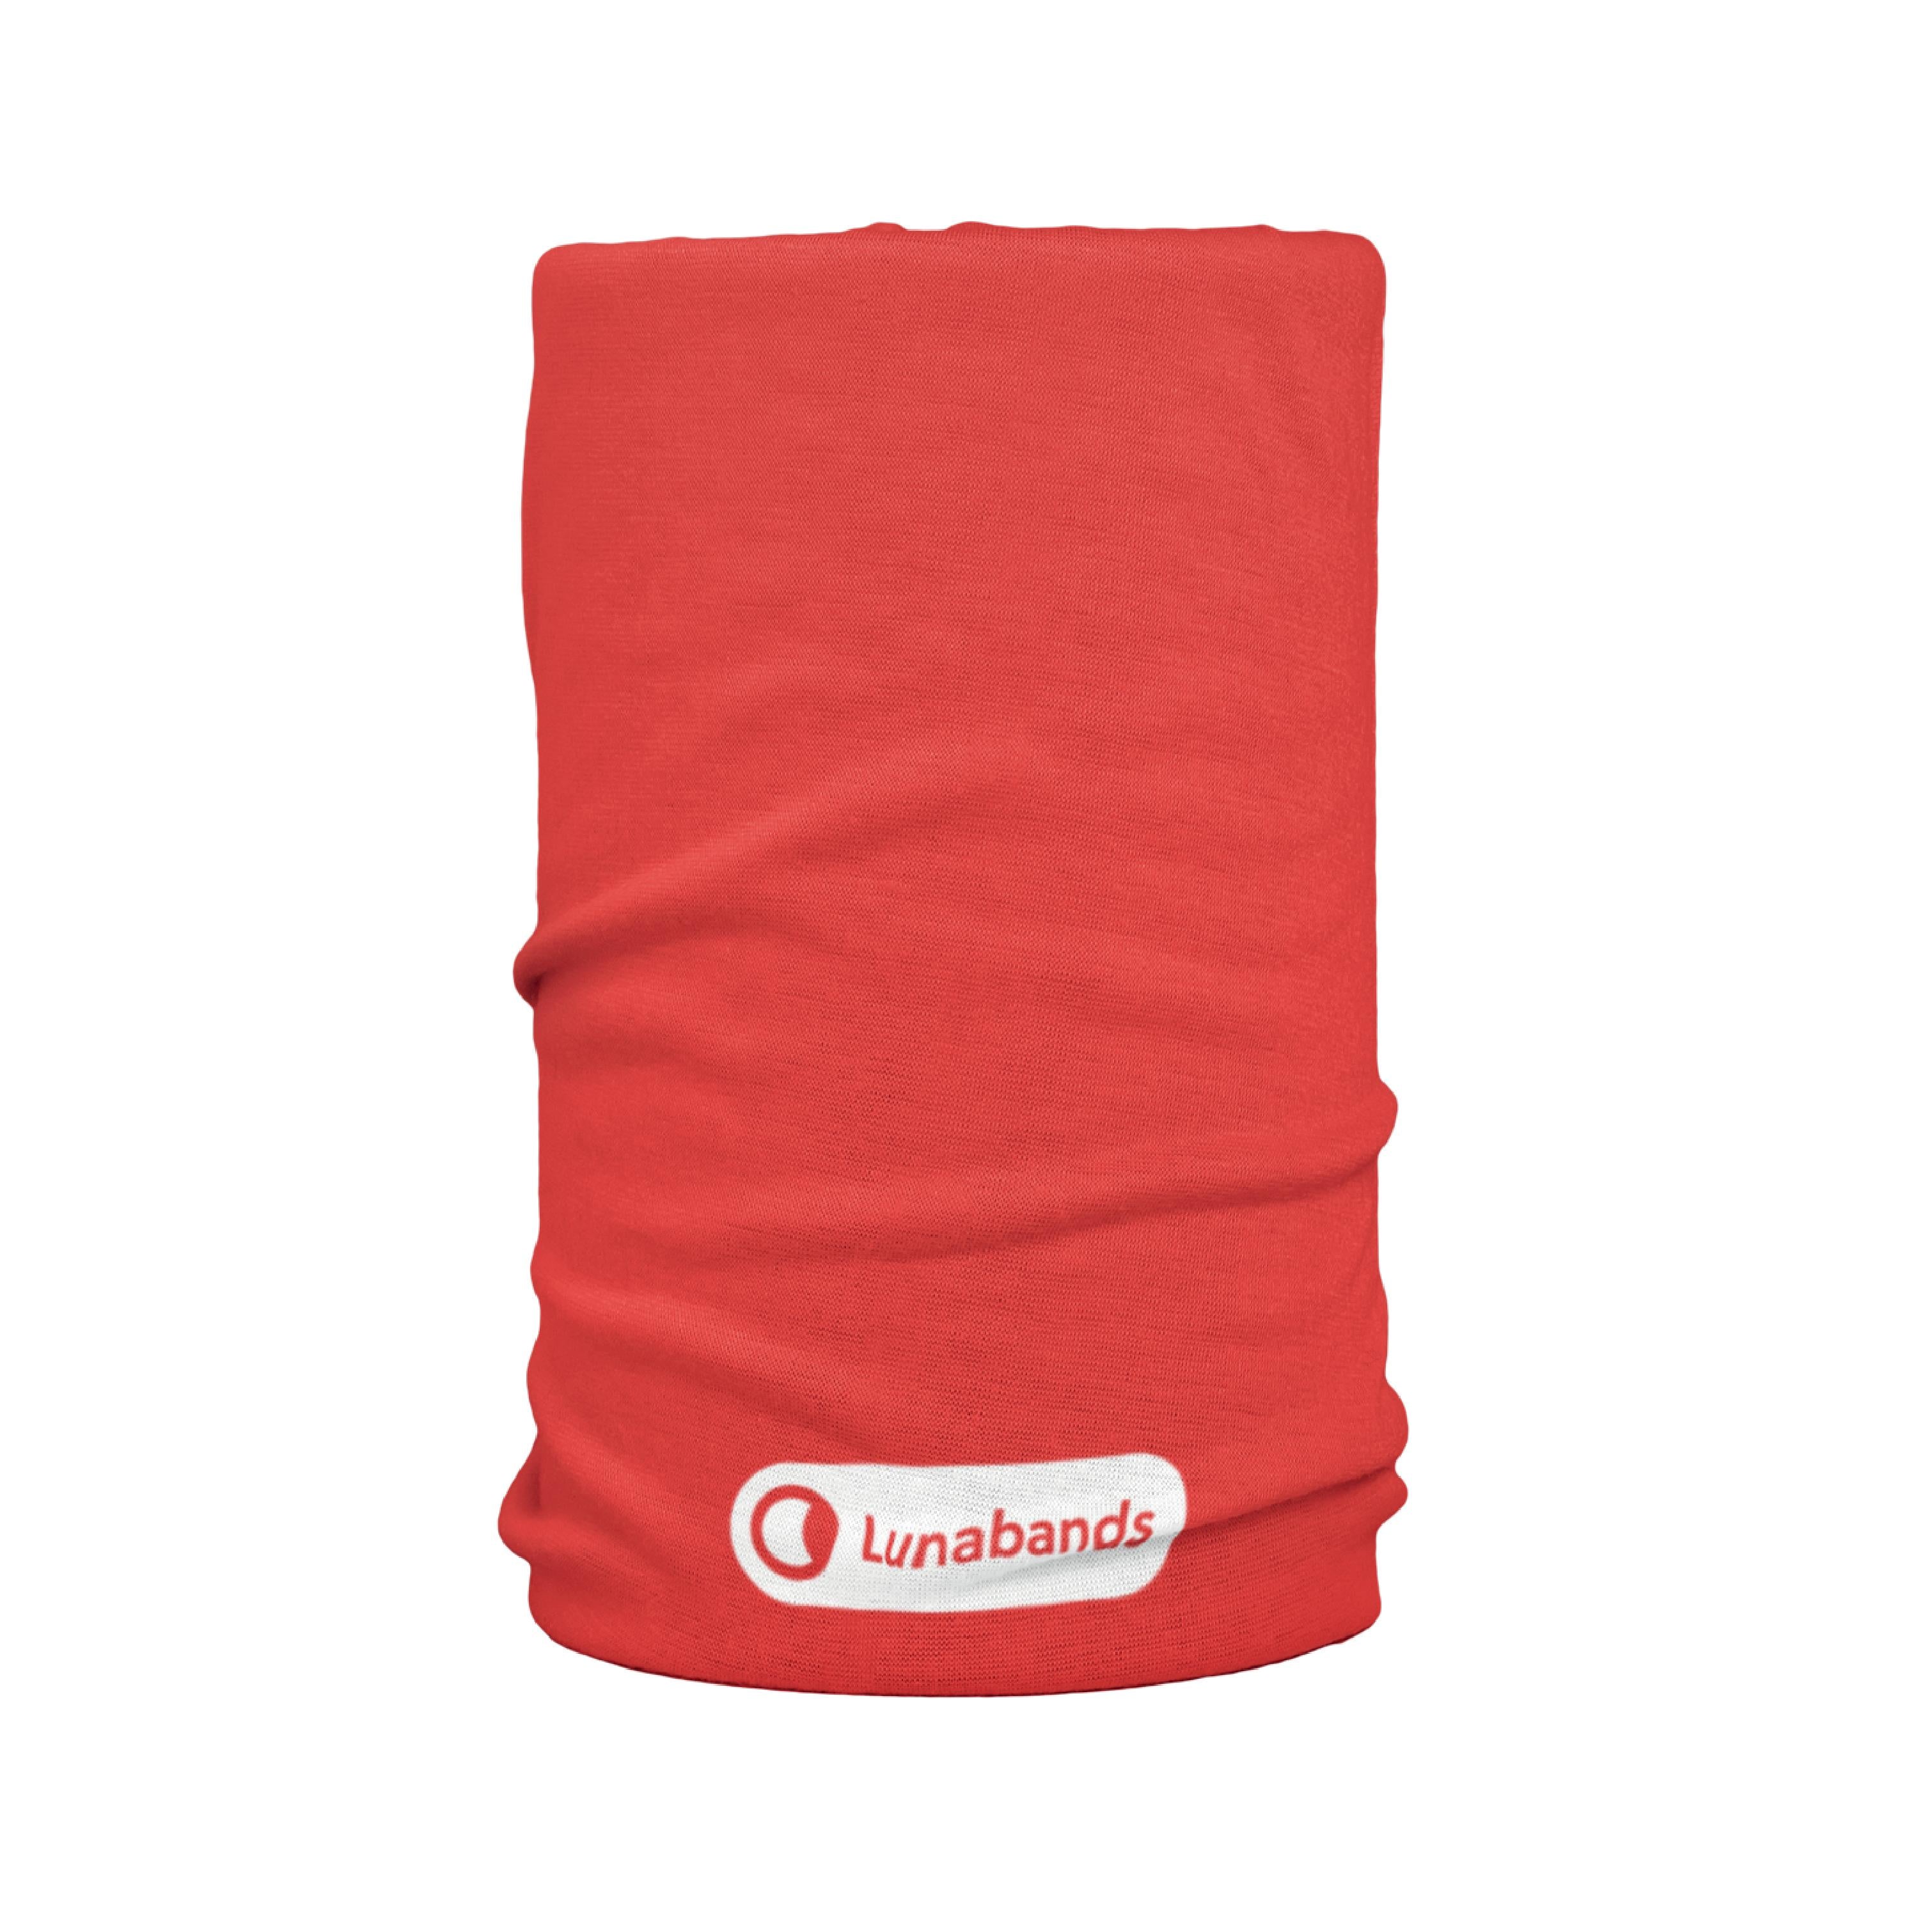 Lunabands Designer Red Block colour Multi Use Multifunctional Running Sports Fitness Yoga Gym Bandana Headband Headbands